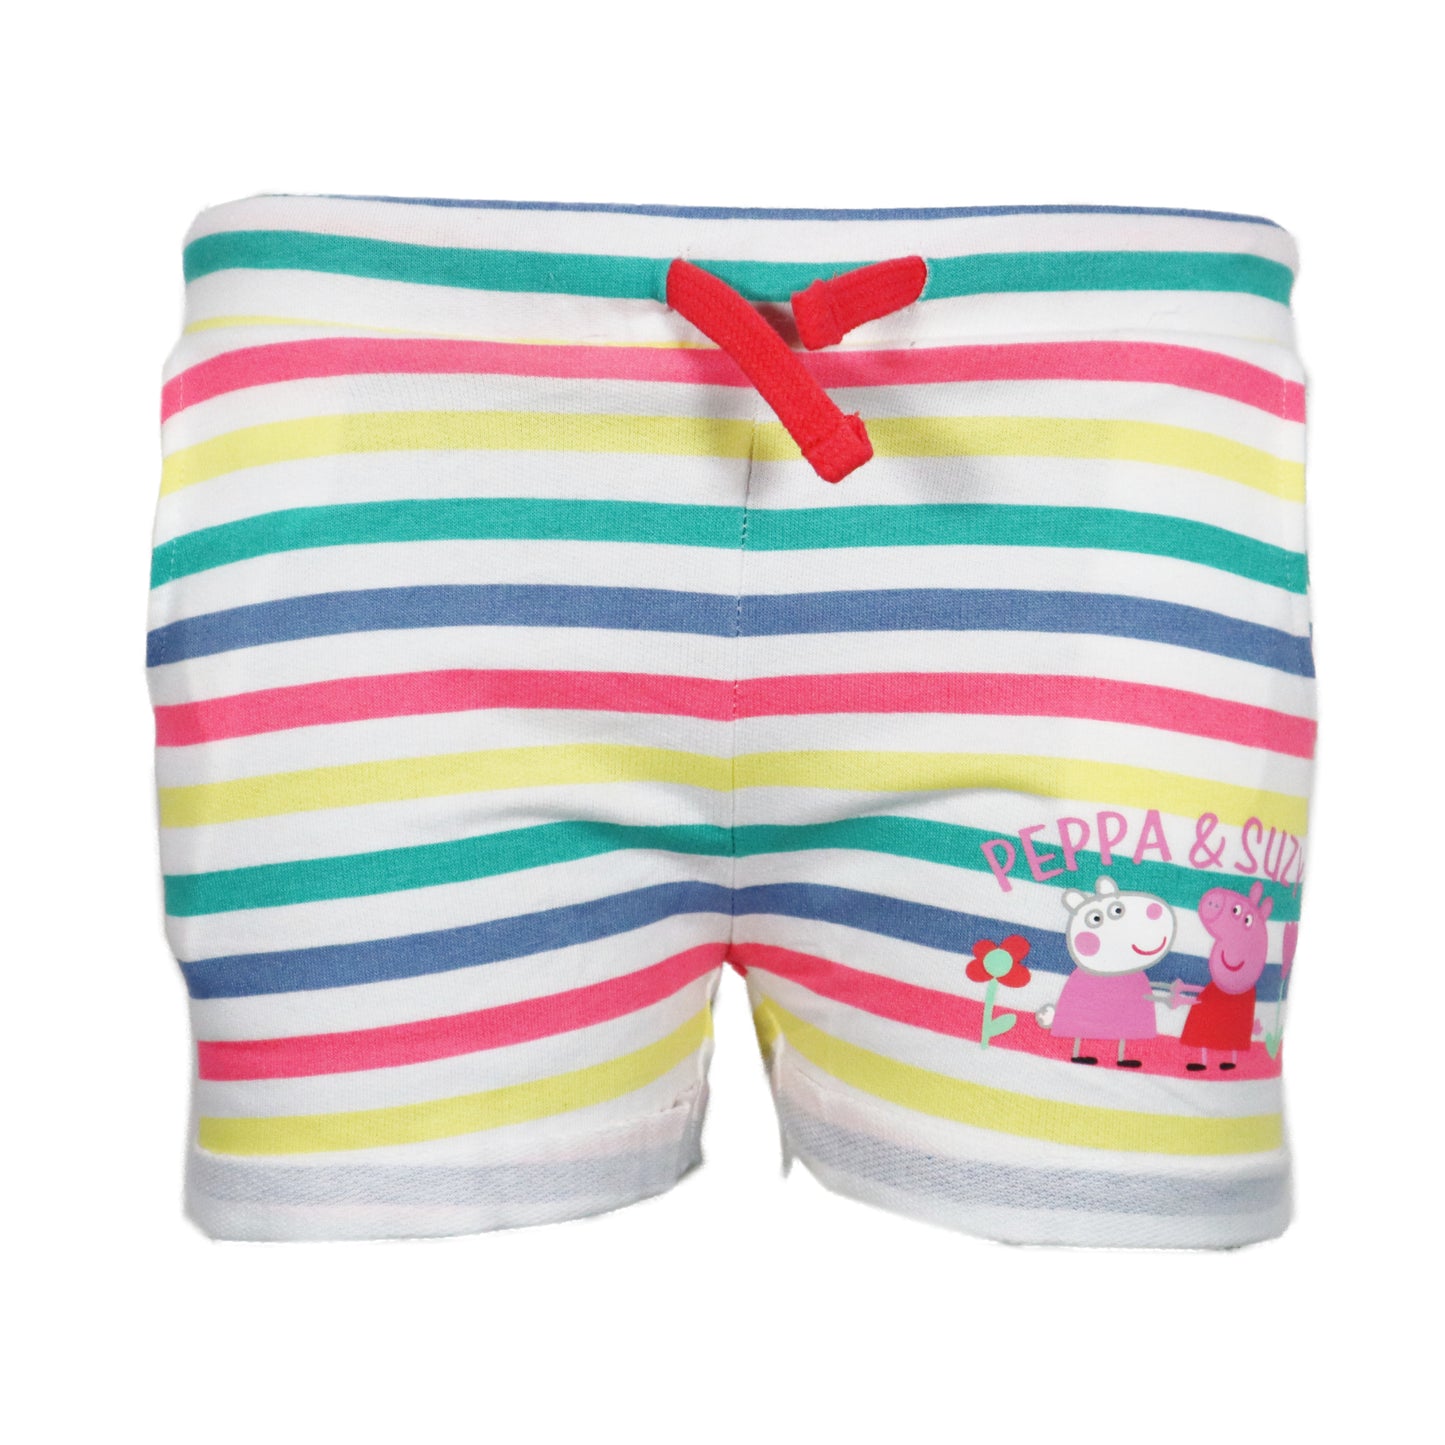 Peppa Pig Wutz Kinder Mädchen Sommerset Shorts plus T-Shirt